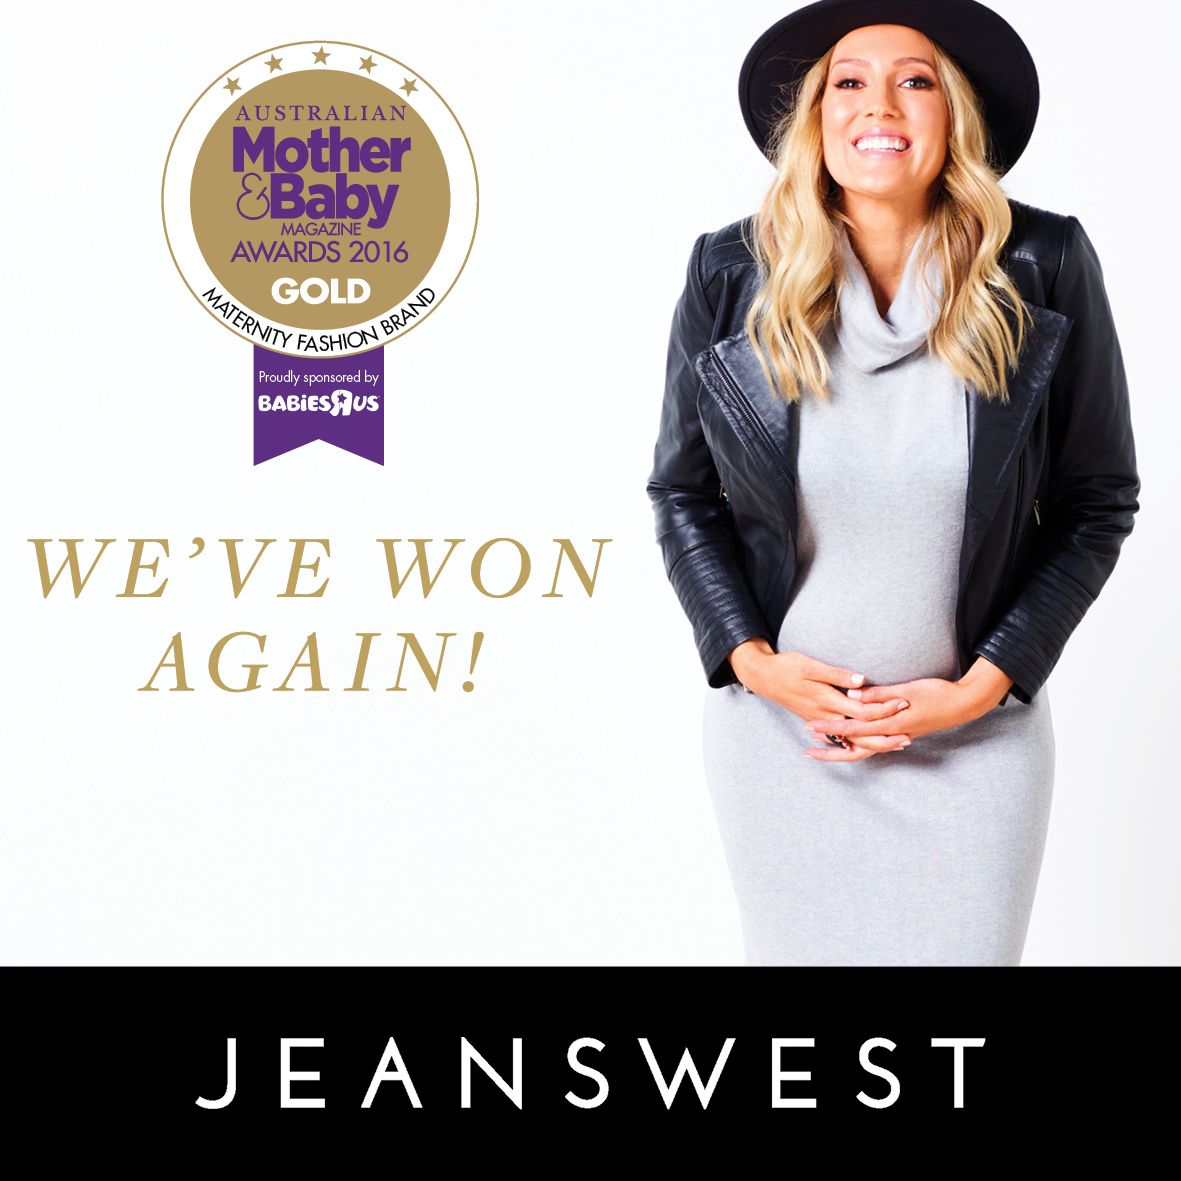 jeanswest_most_popular_maternity_brand_2016_sc